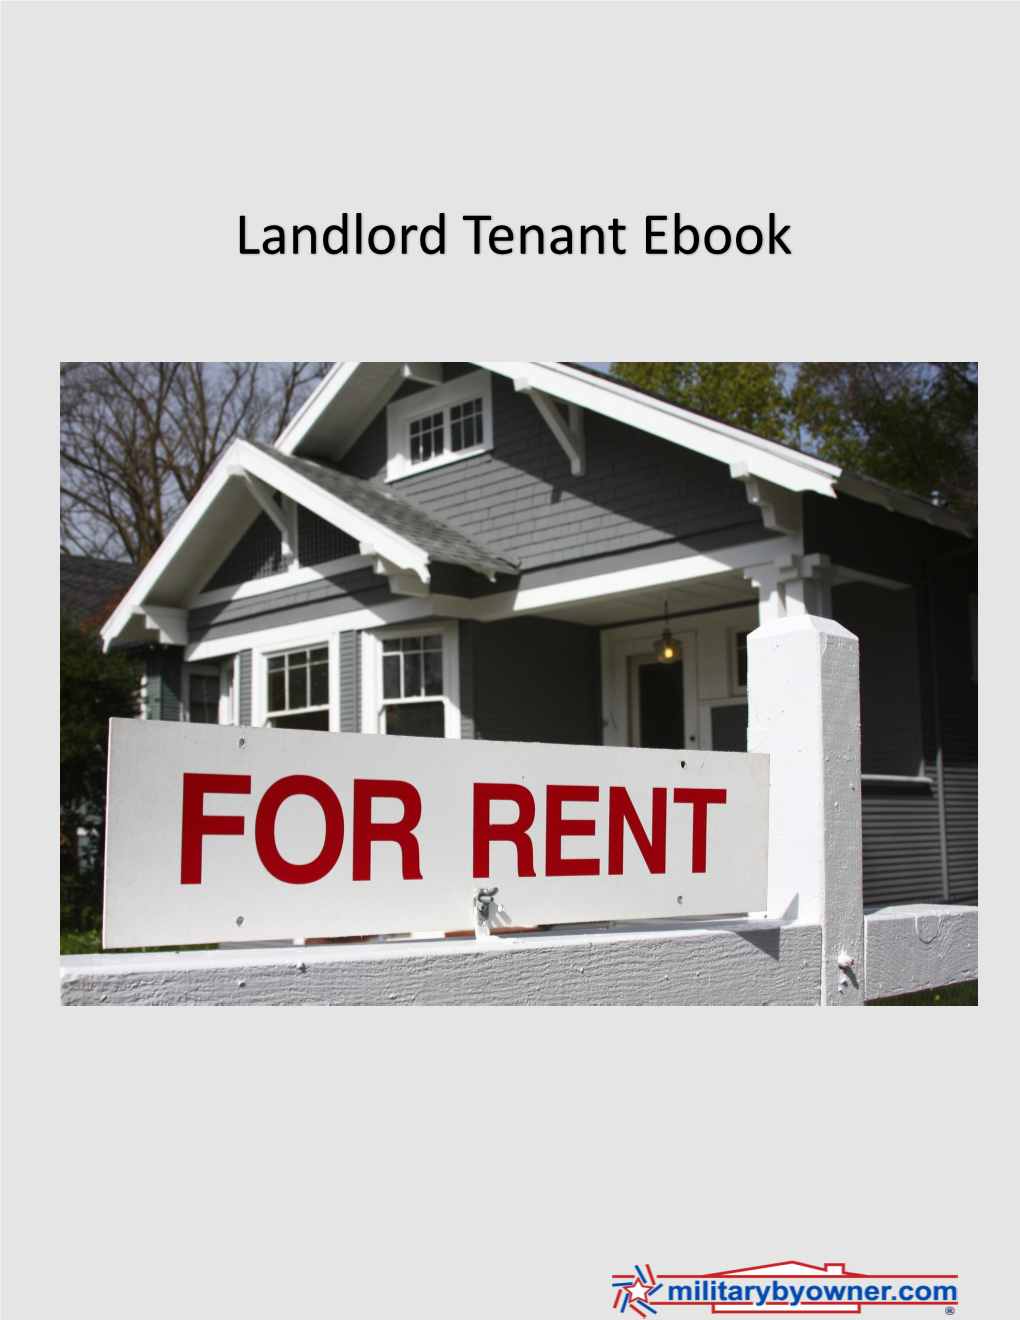 Landlord Tenant Ebook